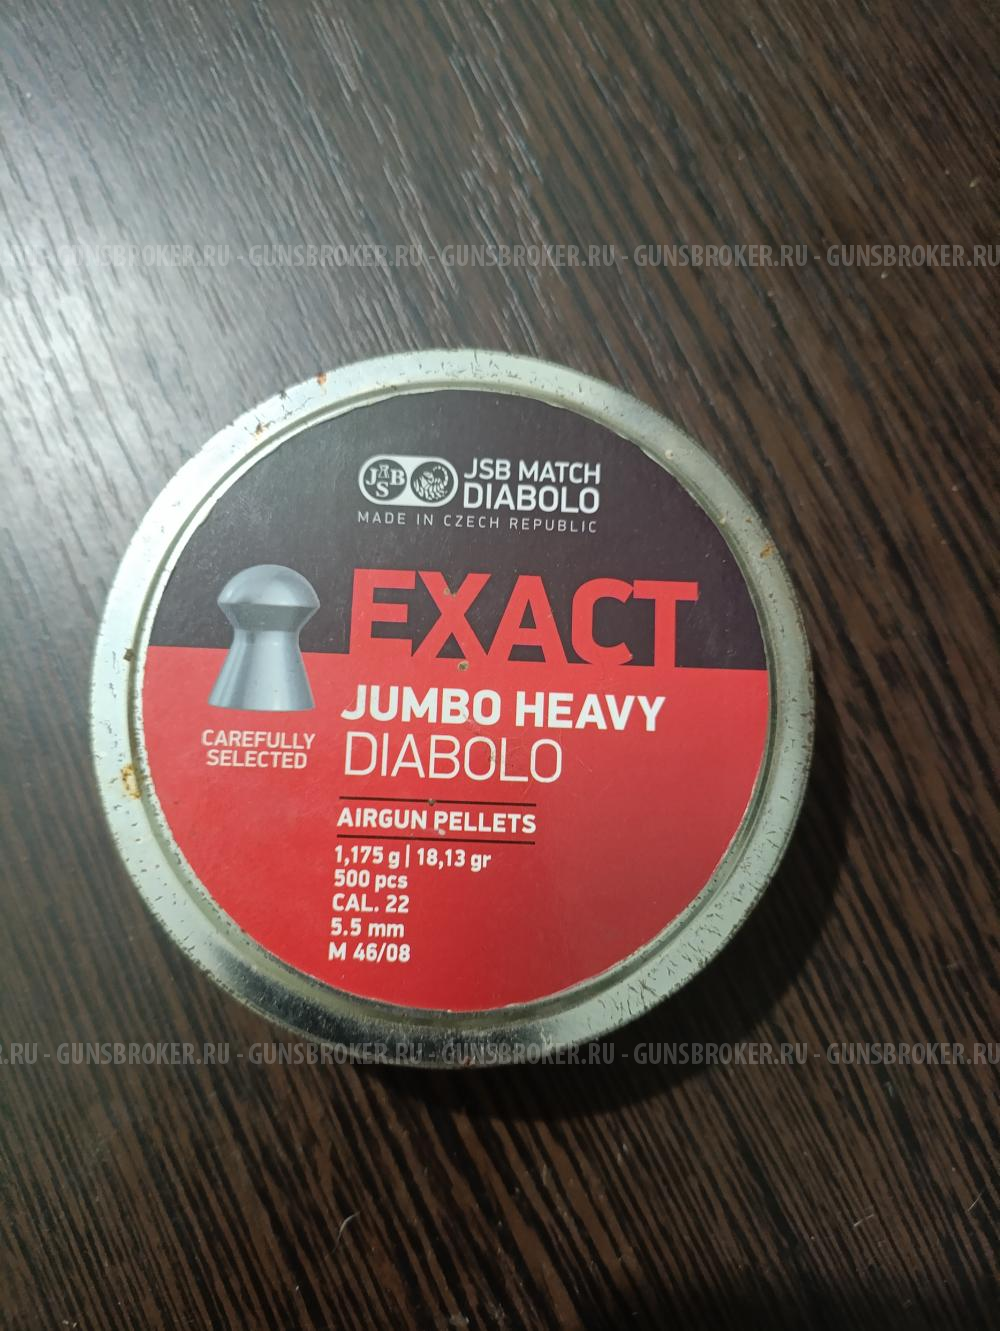 JSB jumbo heavi калибр 5.52 вес 1.175 грамма